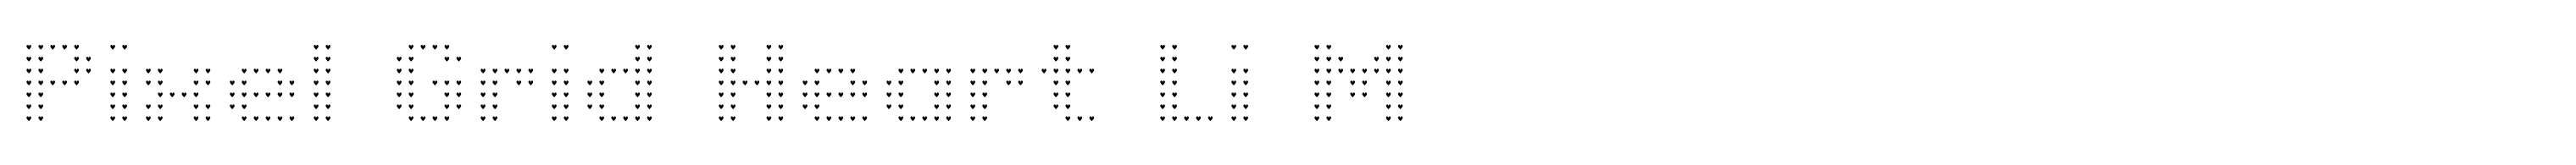 Pixel Grid Heart Li M